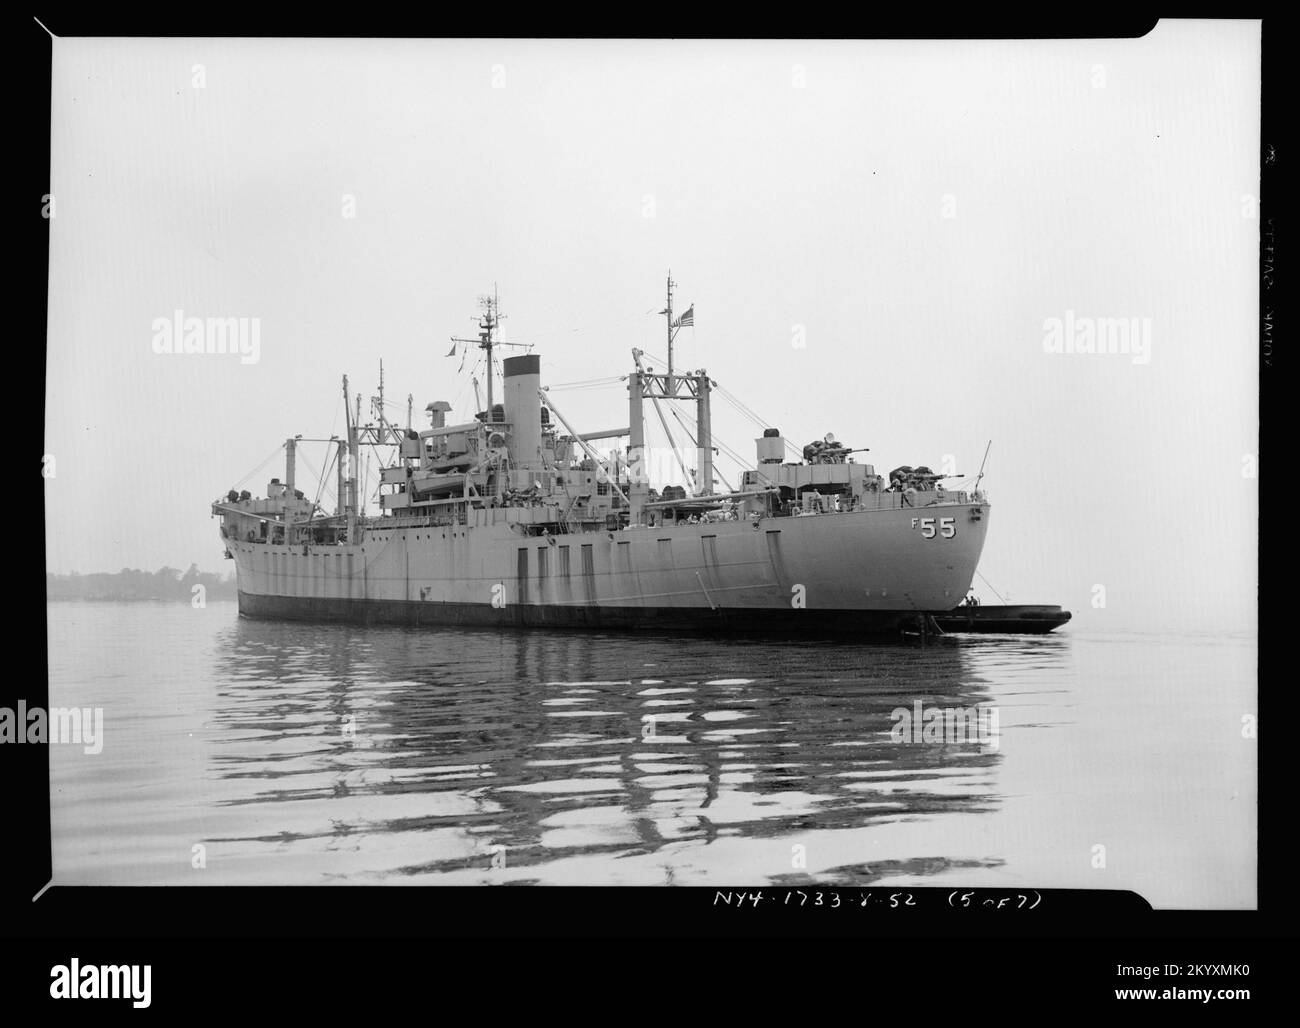 AF-55 Aludra , Ships, Naval Vessels, Boats, Naval History, Navy Stock Photo